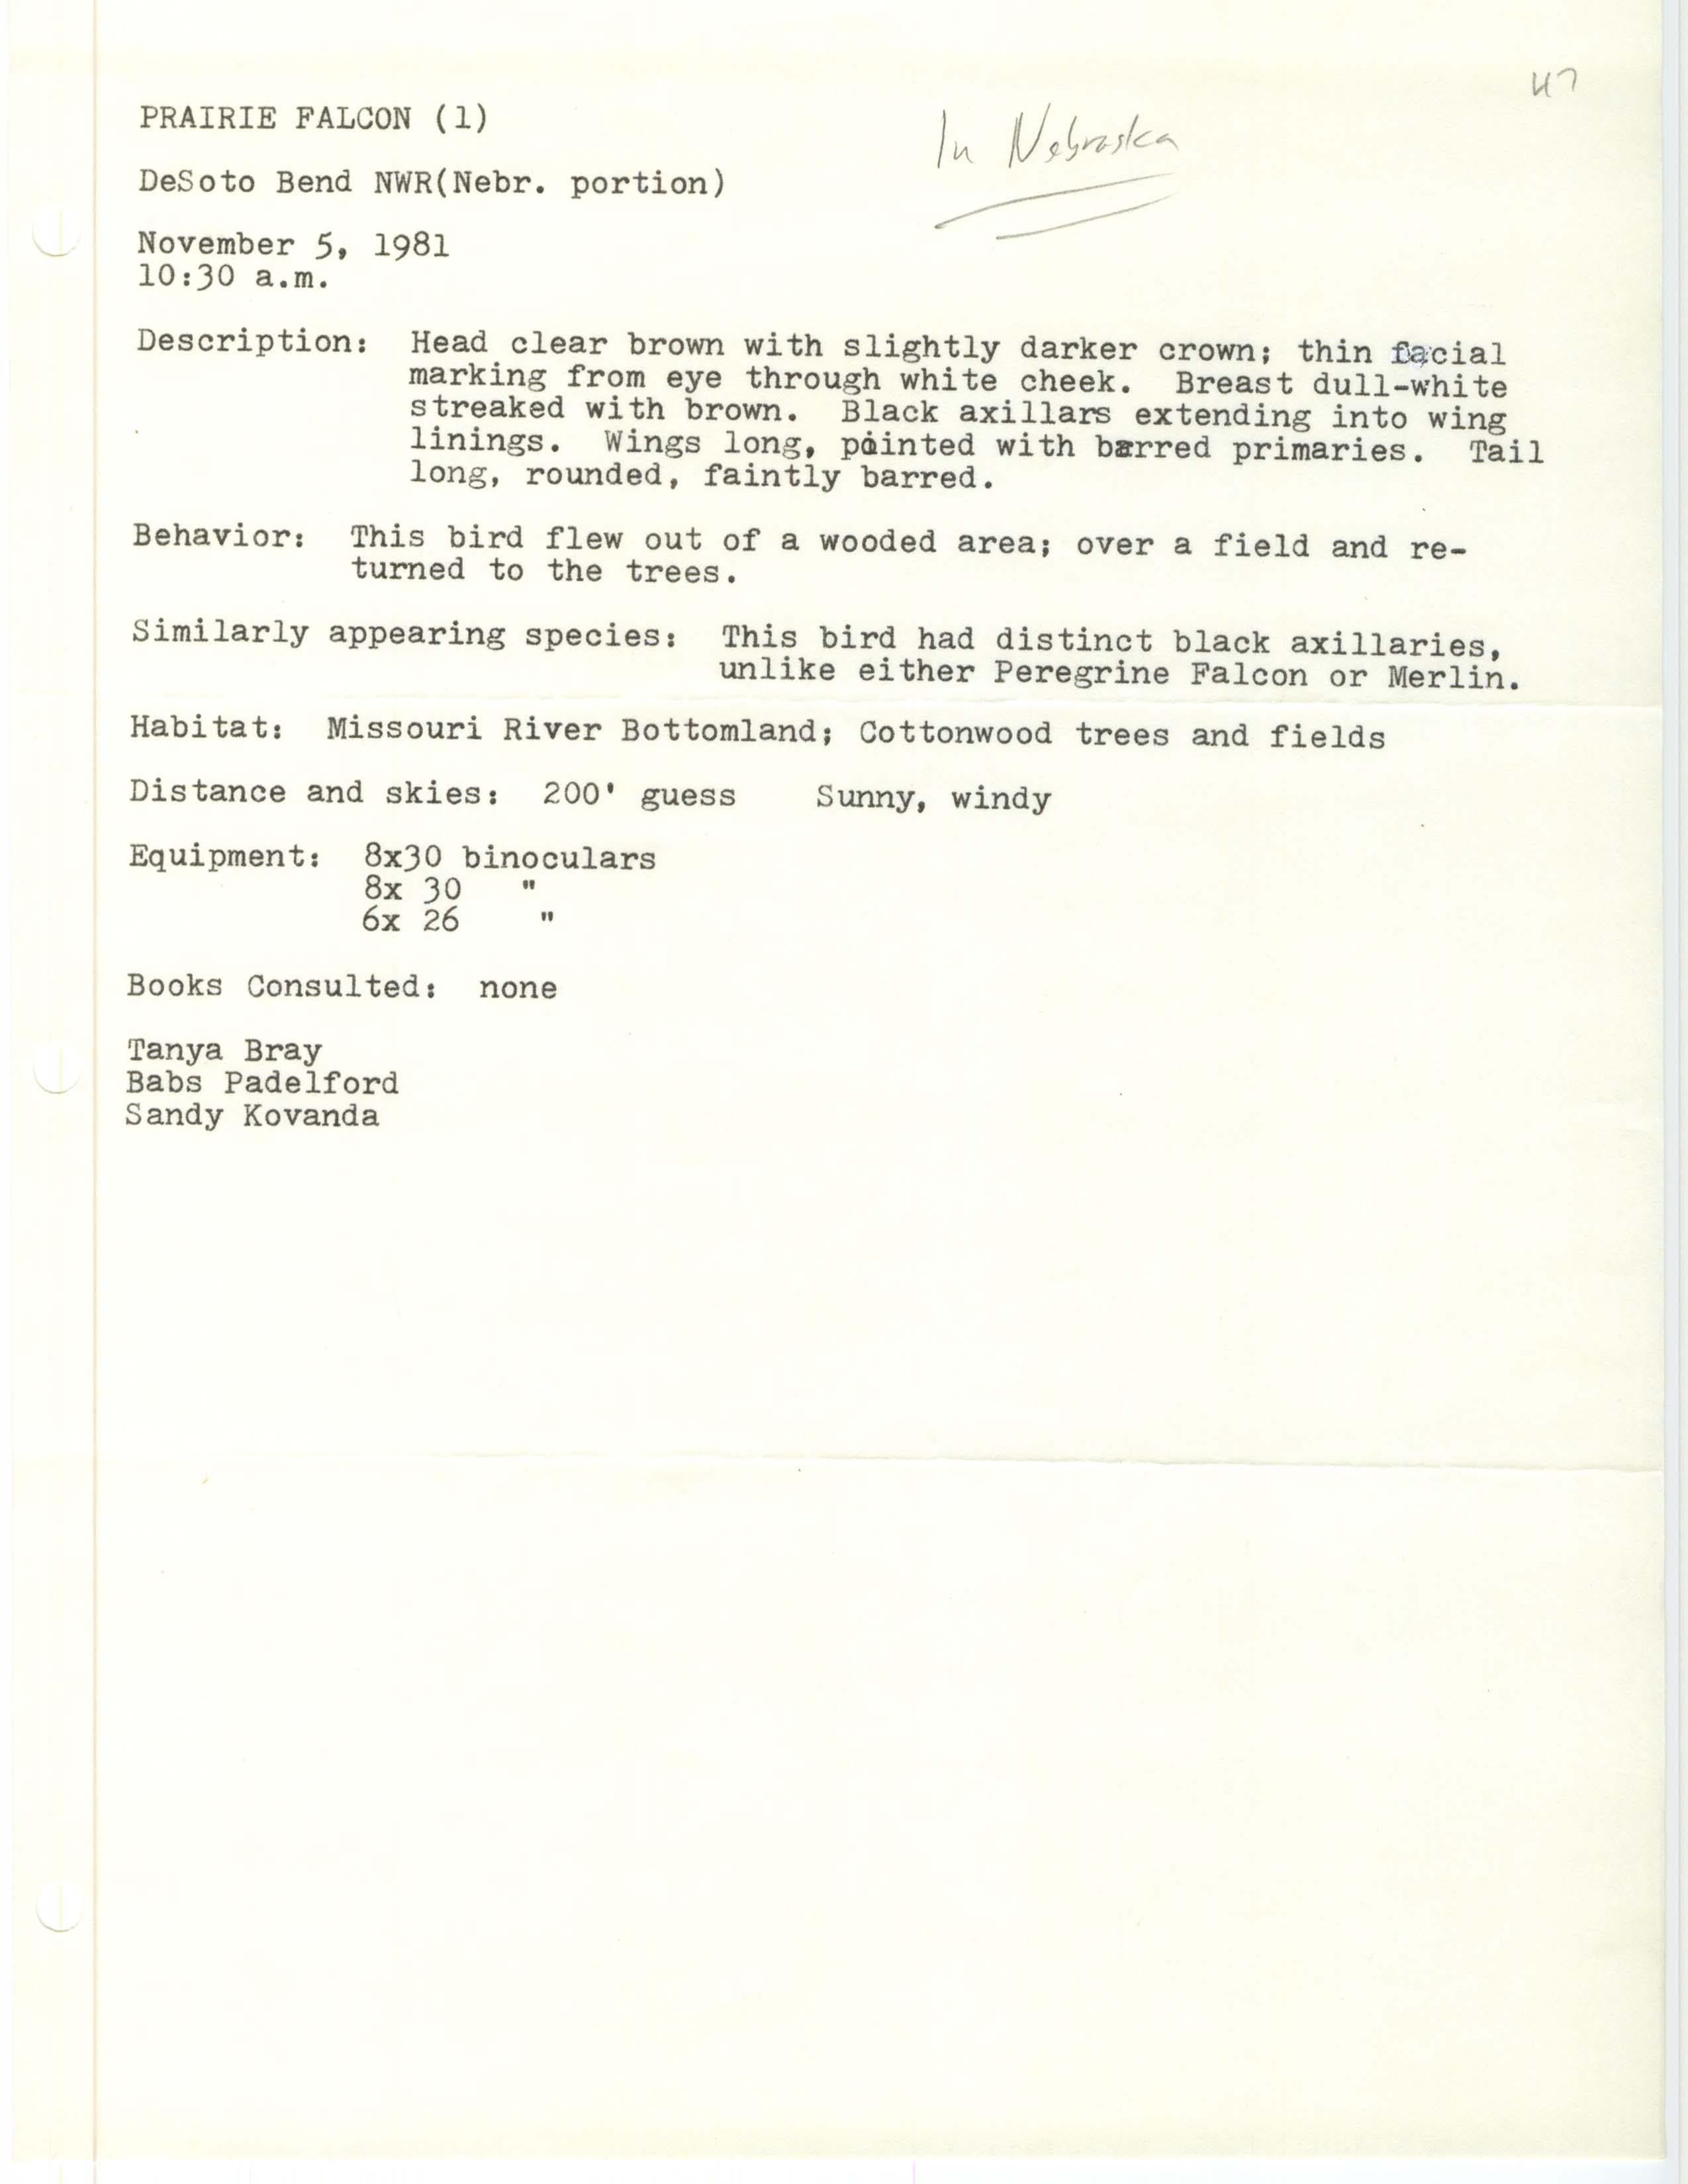 Rare bird documentation form for Prairie Falcon at DeSoto Bend National Wildlife Refuge, 1981